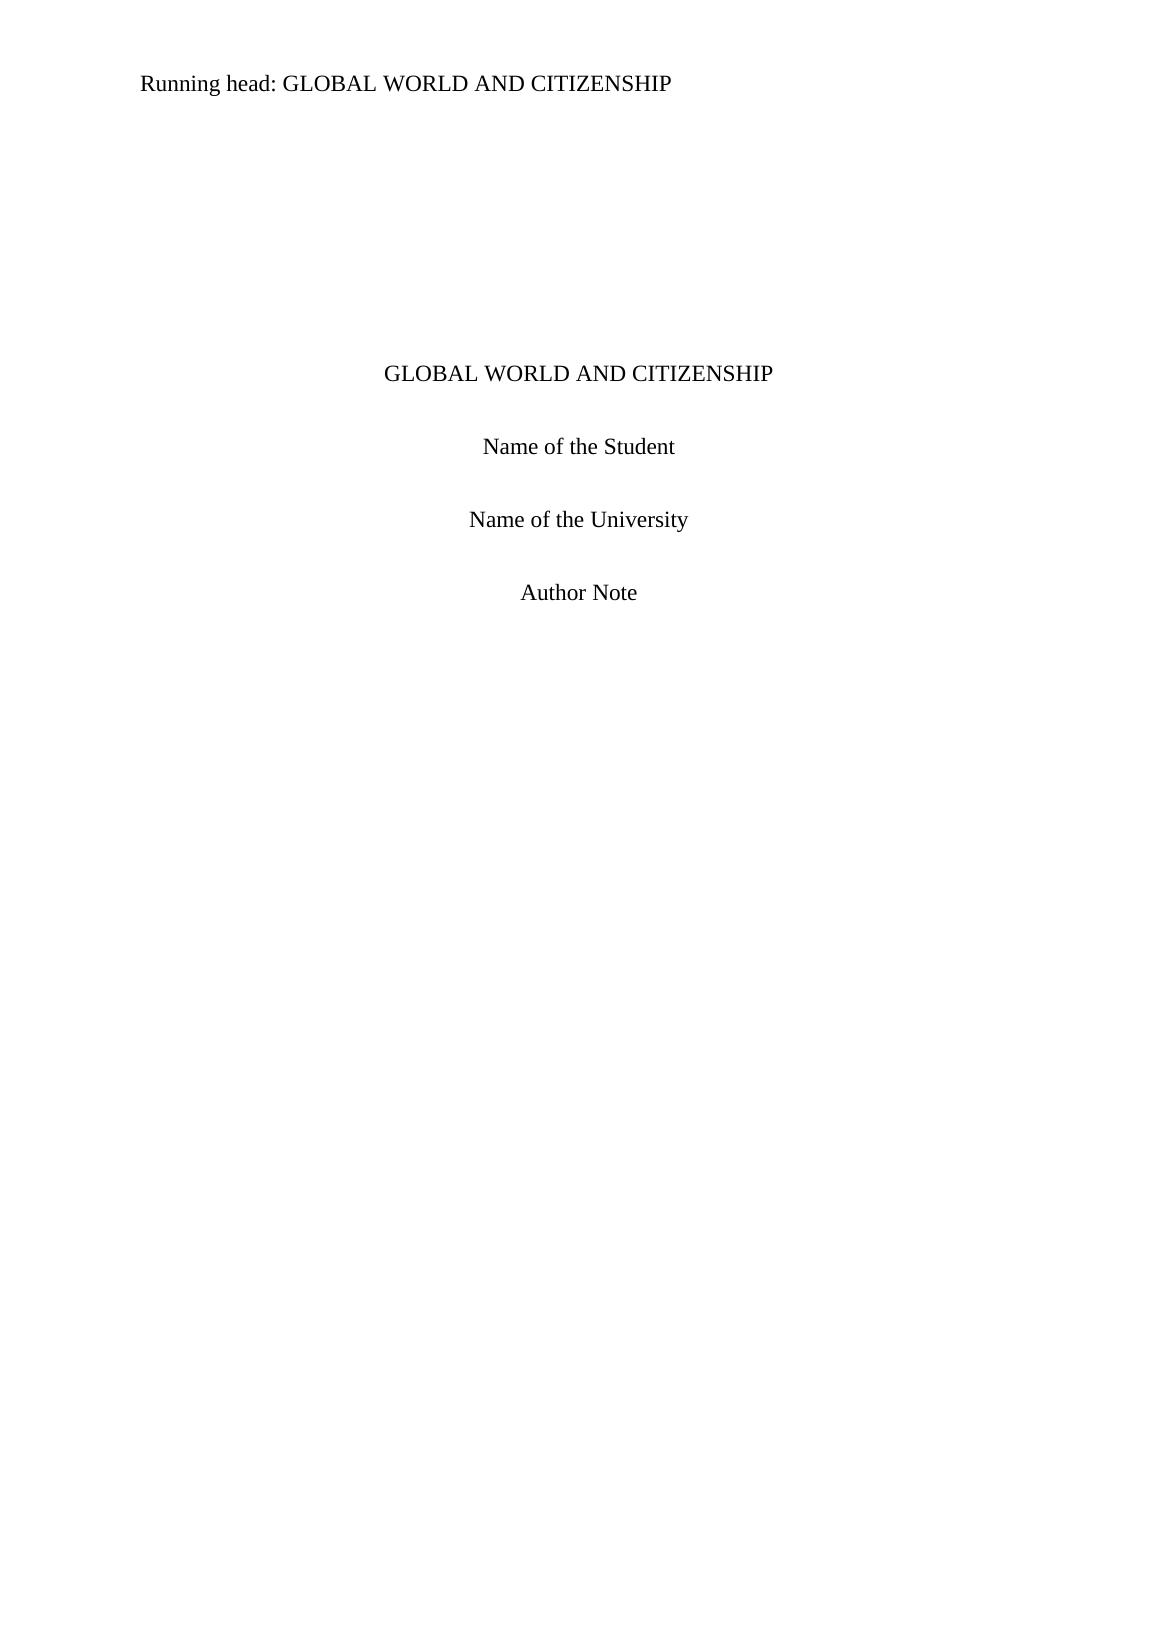 Global World and Citizenship: Assignment_1